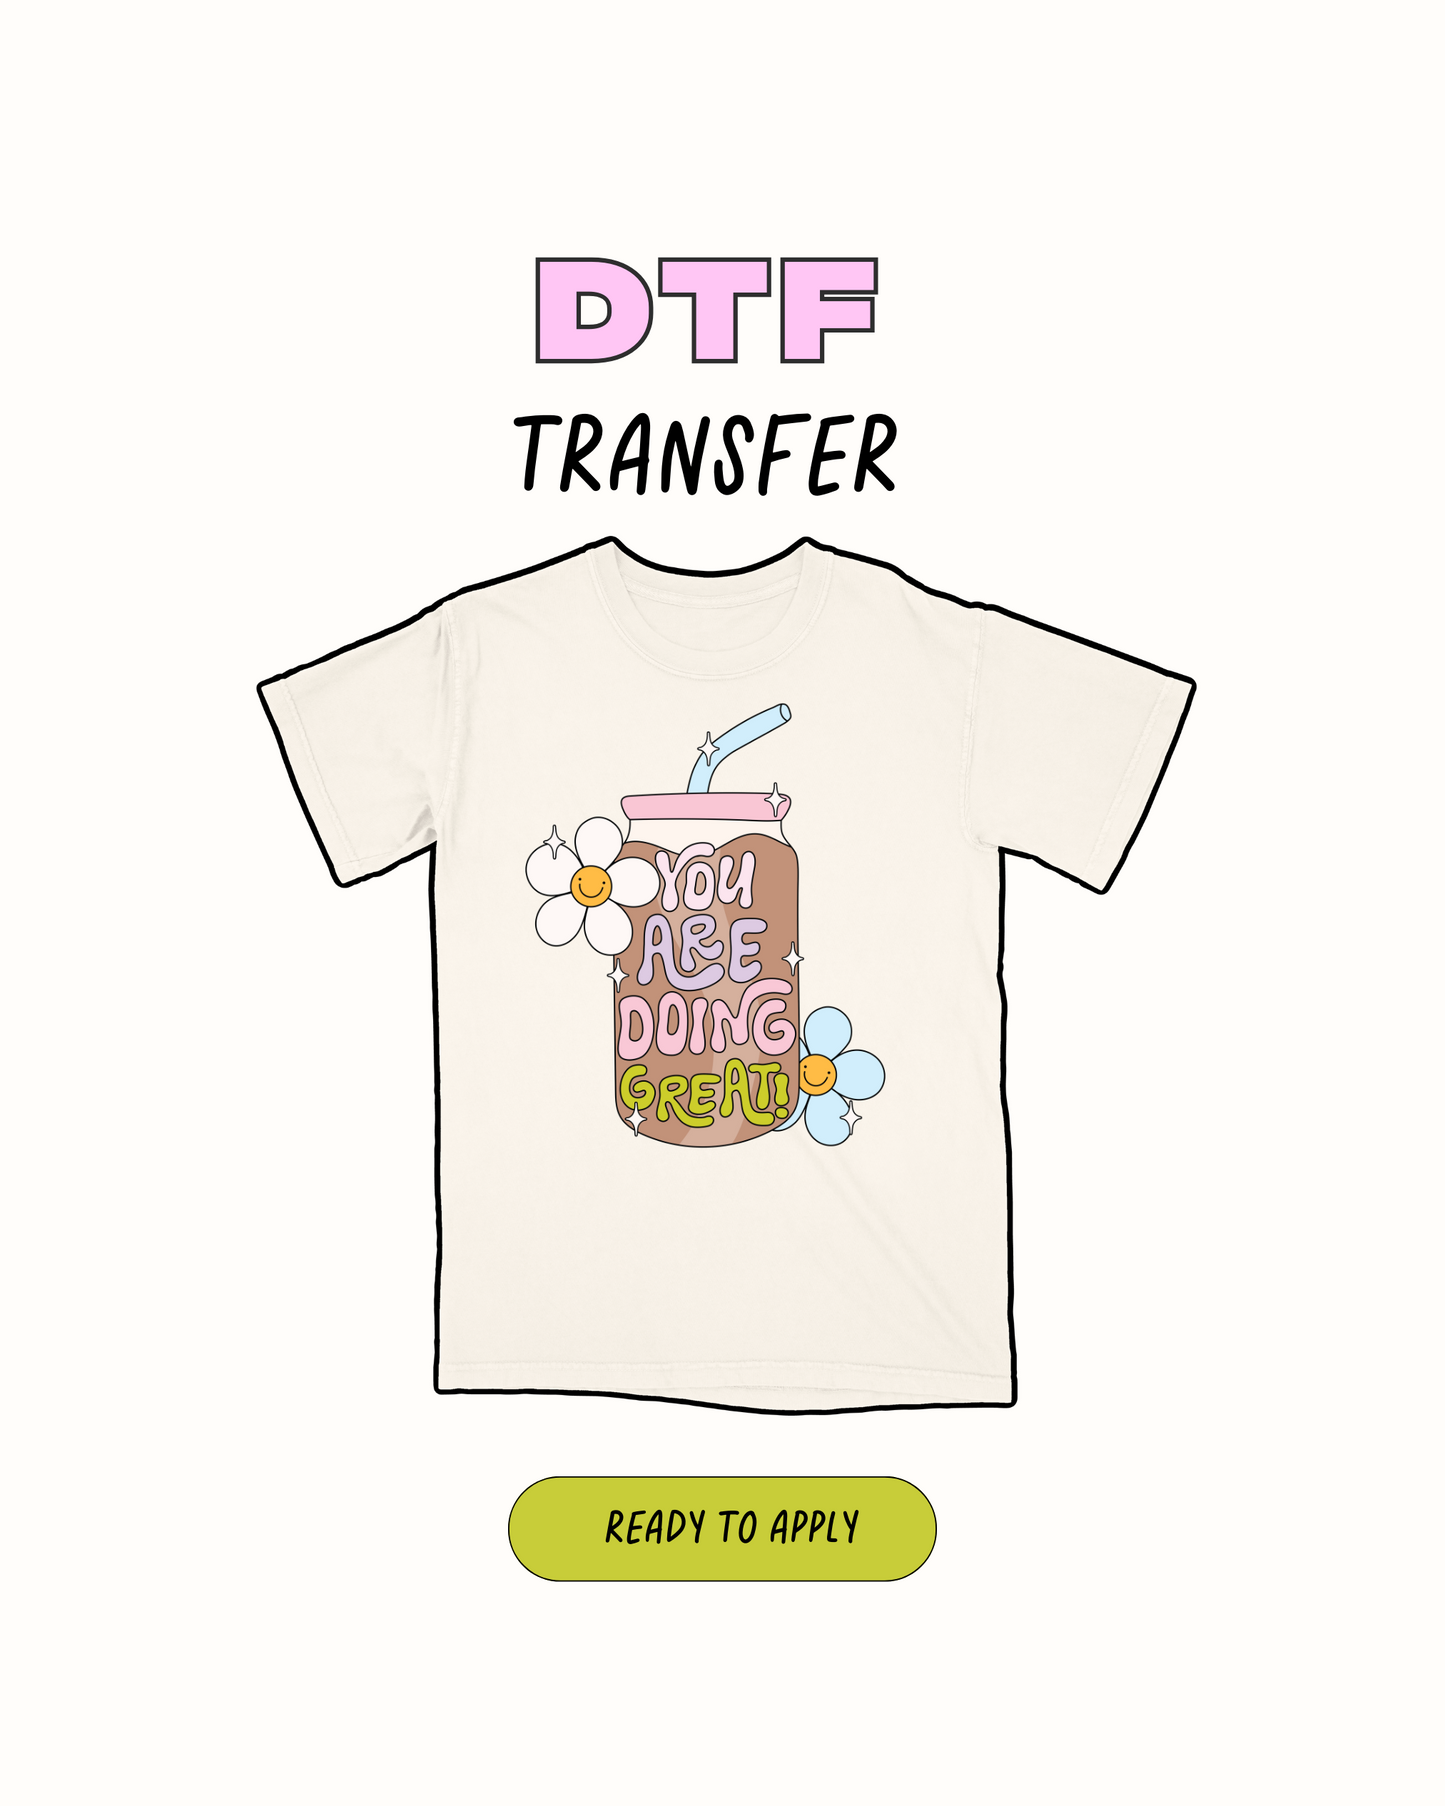 doing grate - DTF Transfer